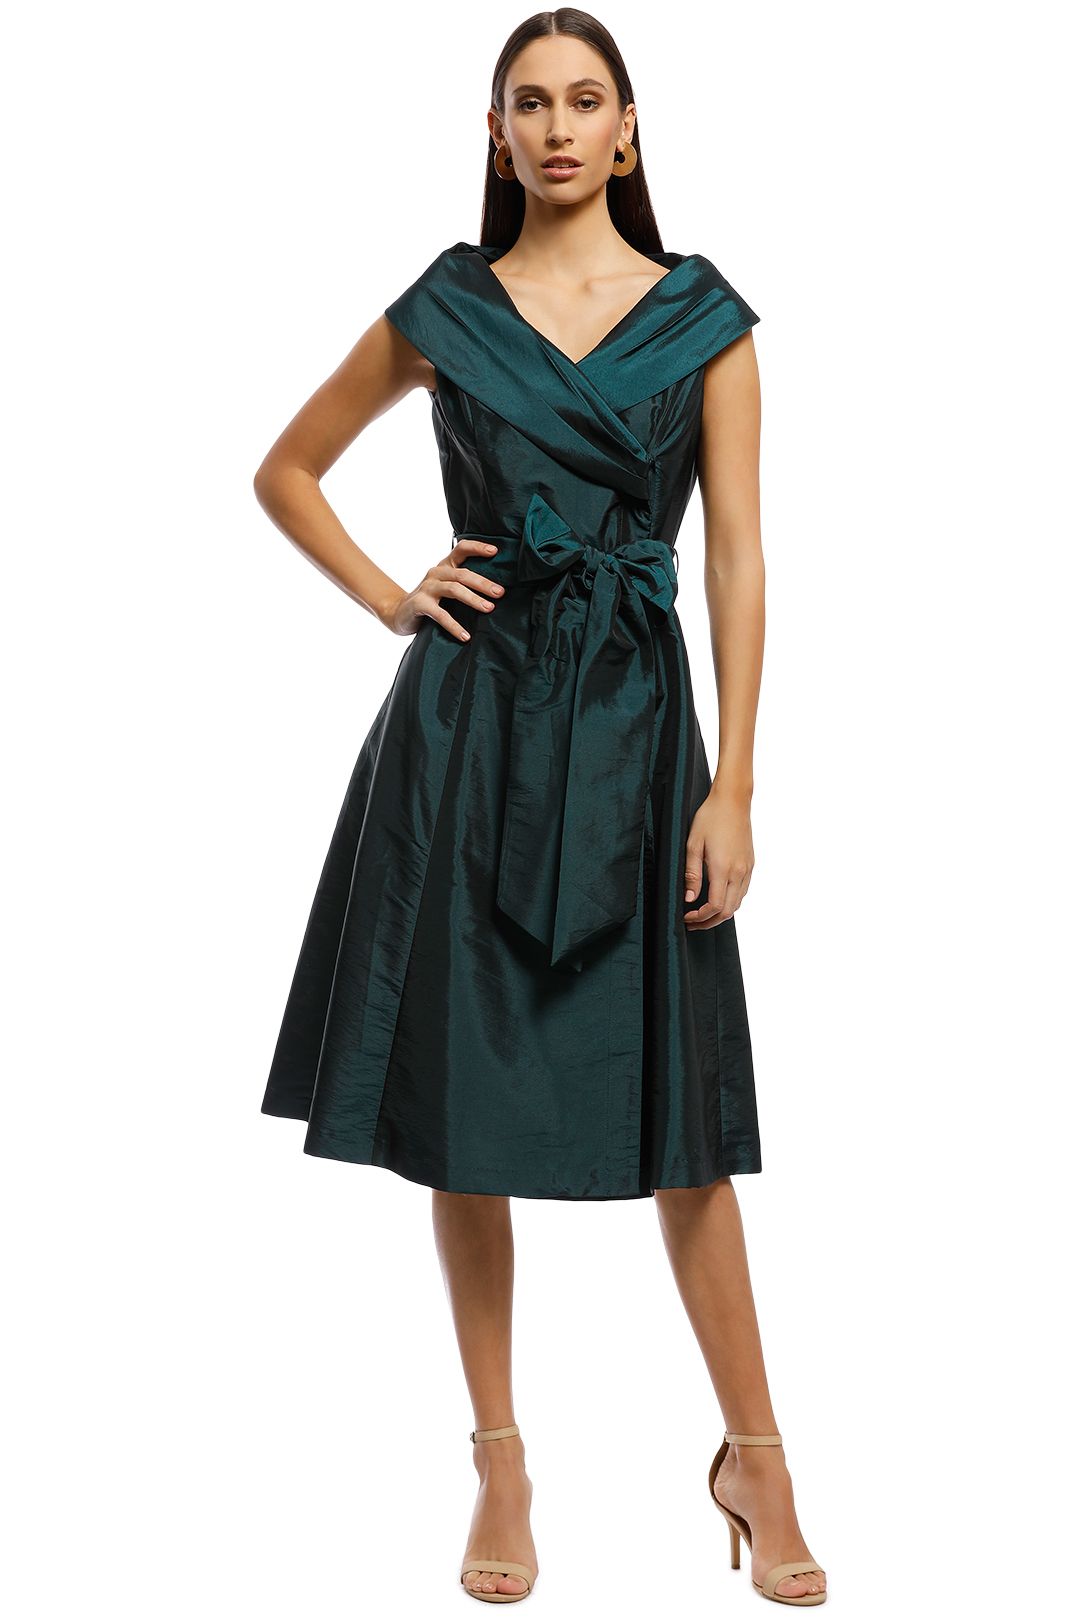 Montique - Valini Tafetta Dress - Emerald - Front